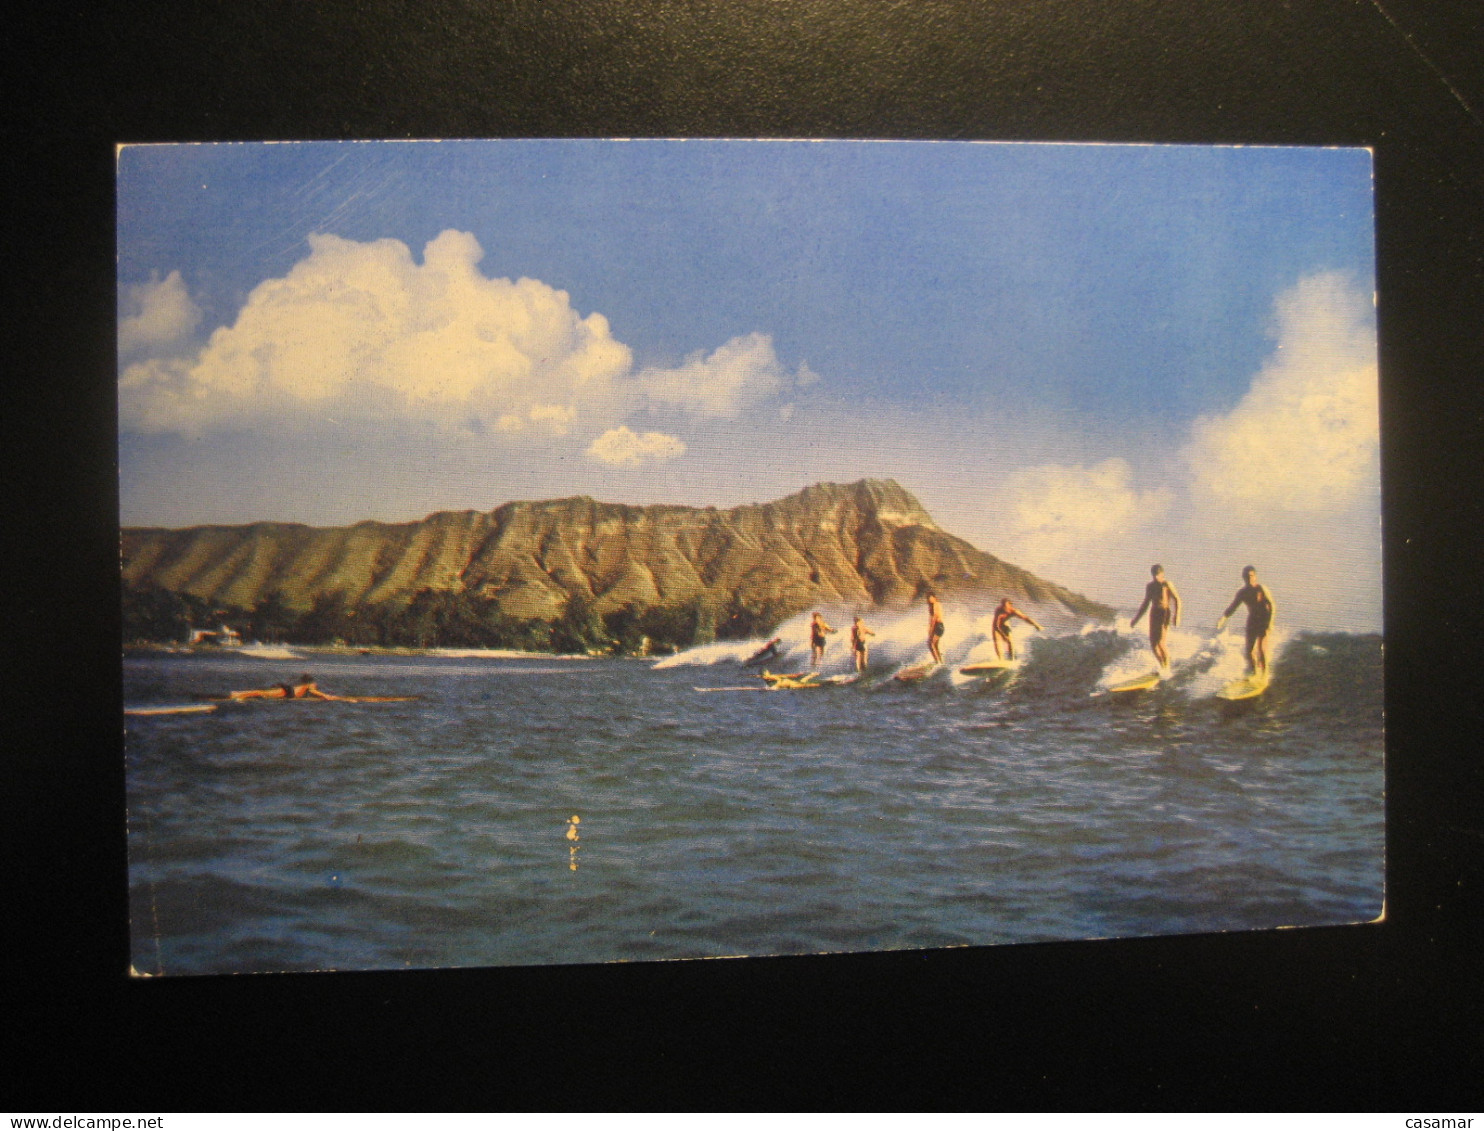 WAIKIKI Honolulu Hawaii Beach Surf Surfing Surfer Flying Clippers Pan American World Airways Postcard USA - Honolulu